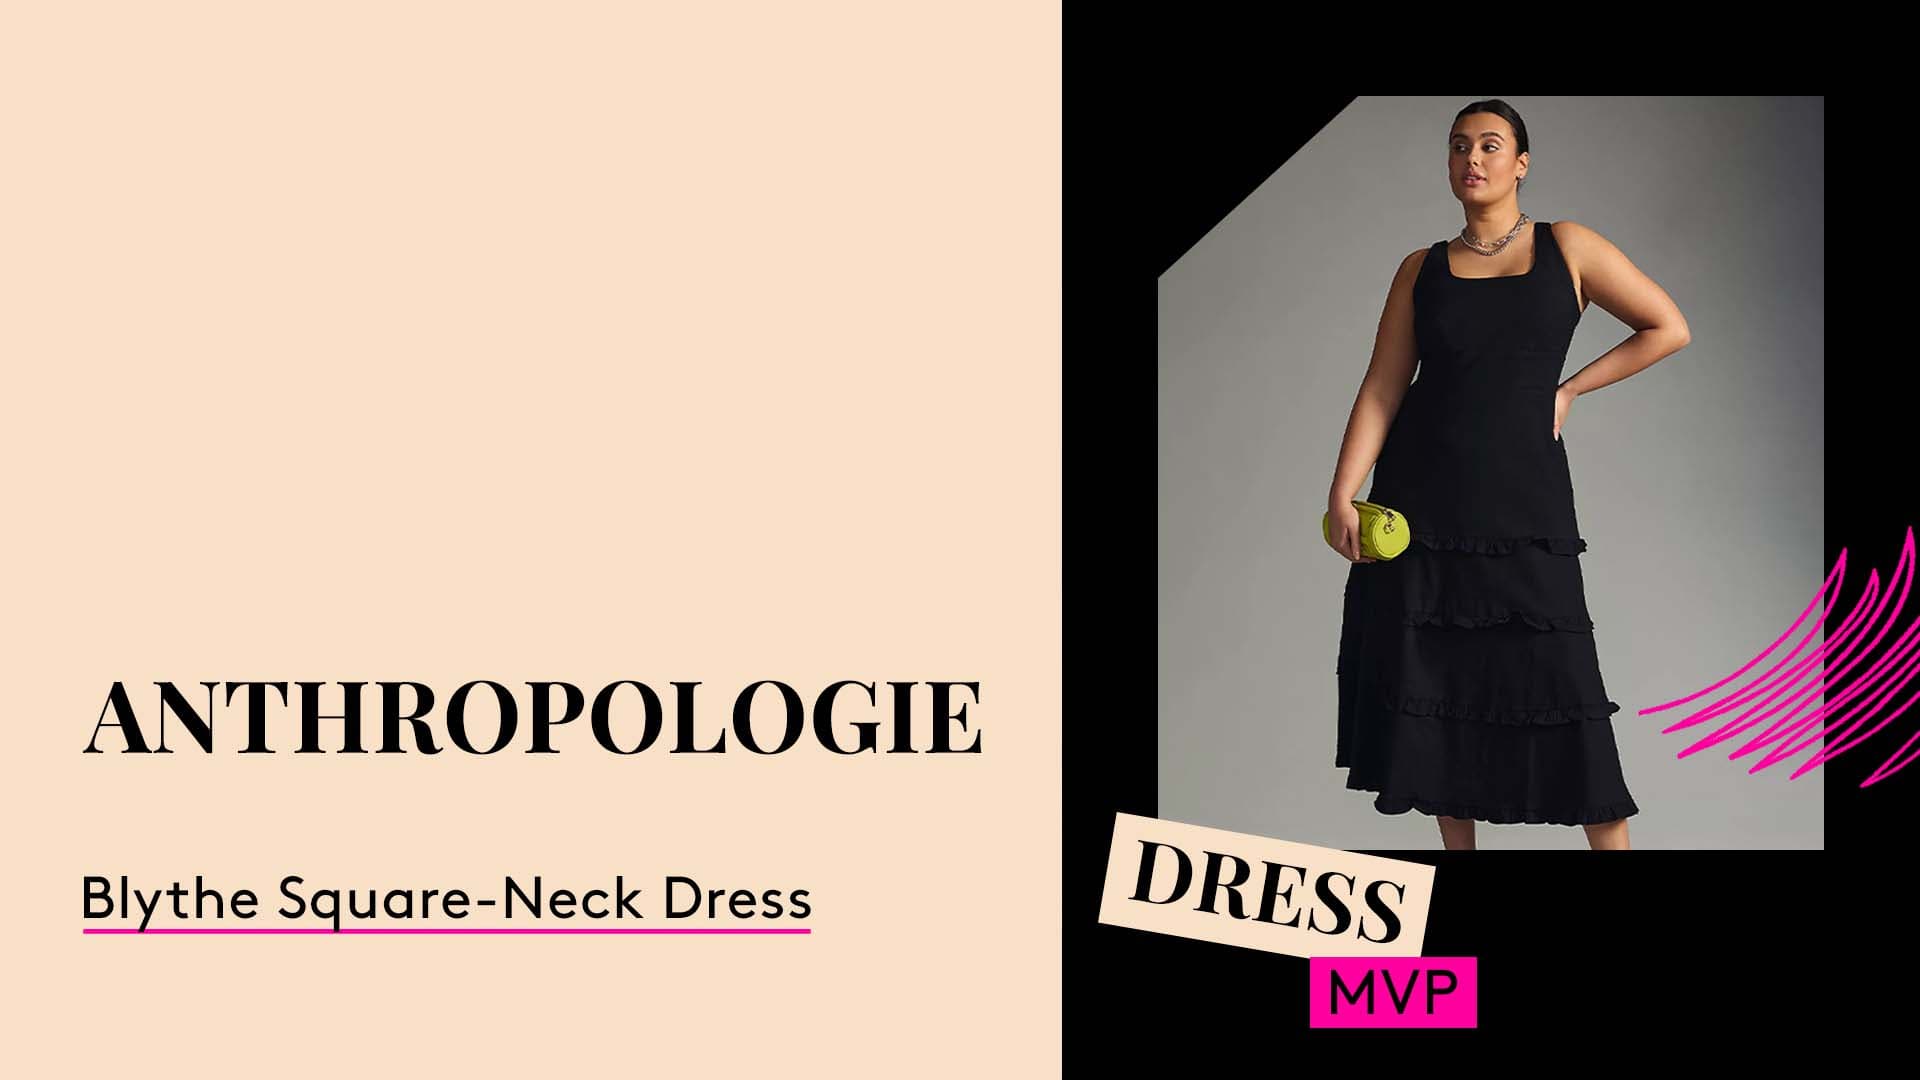 Dress MVP.  Anthropologie Blythe Square-Neck Dress.